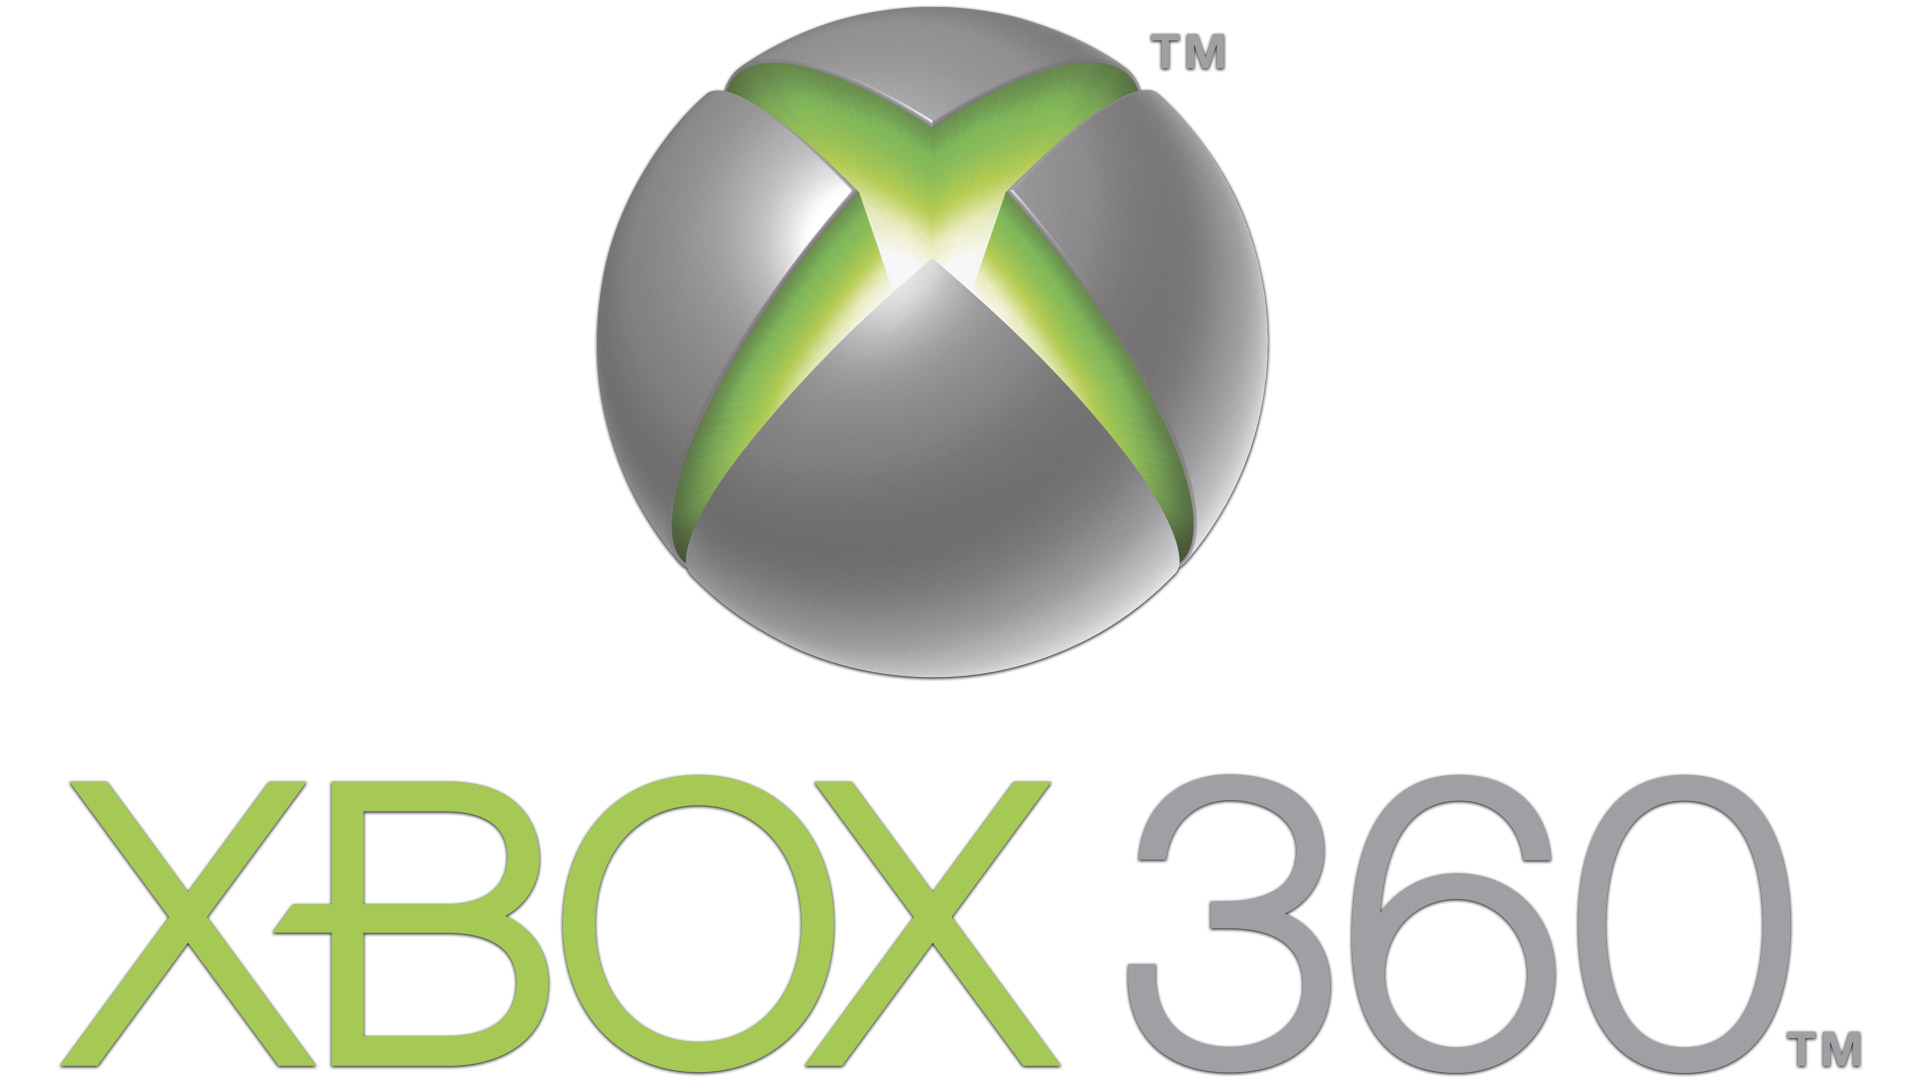 Xbox 360 (1080p)